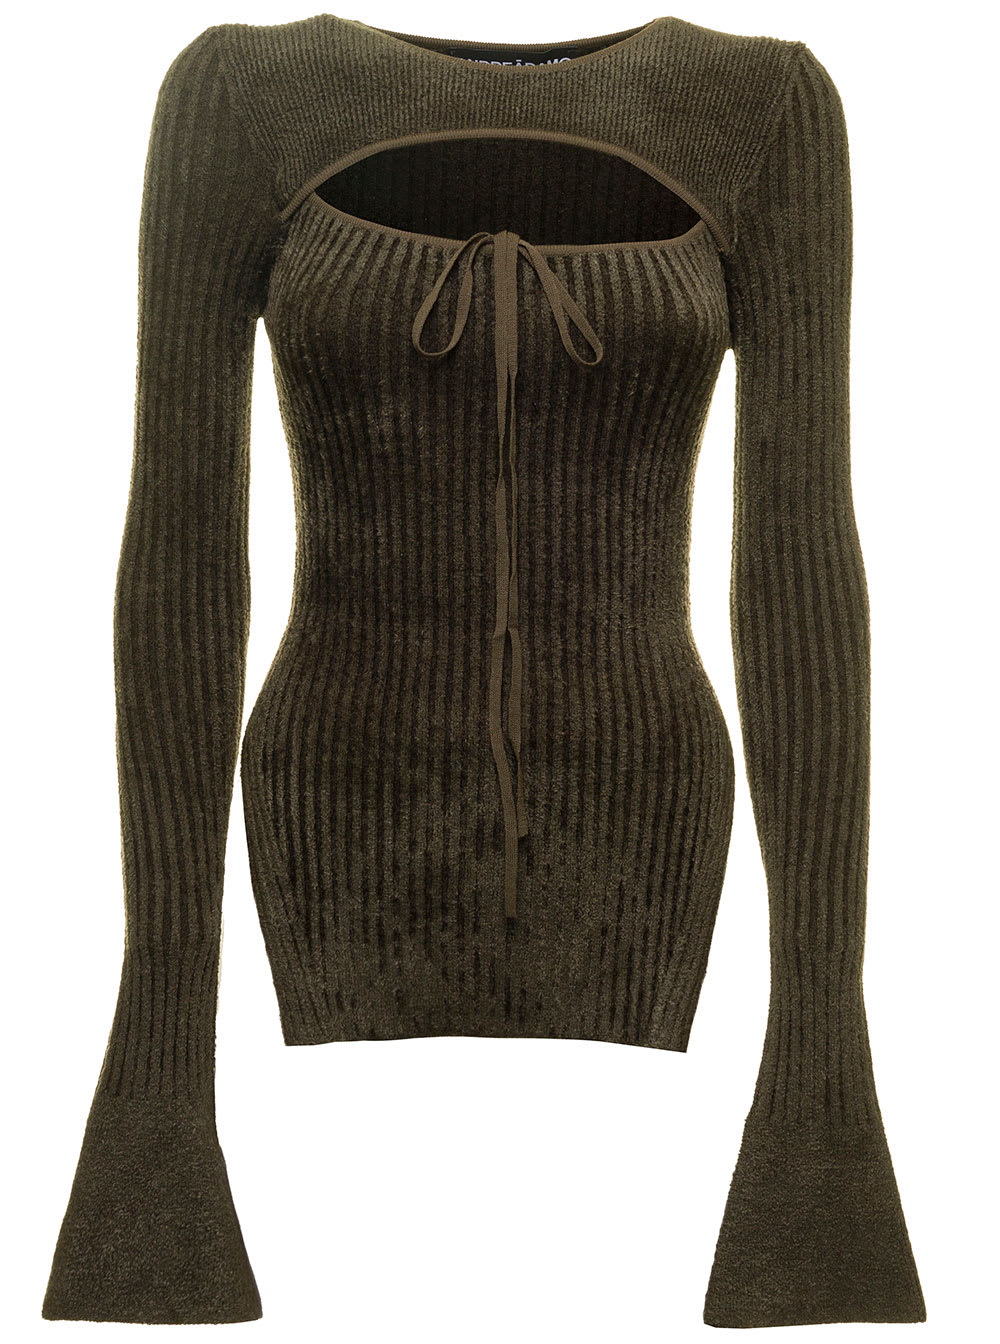 ANDREADAMO Green Velvet Cut-out Sweater Woman Andrea Adamo